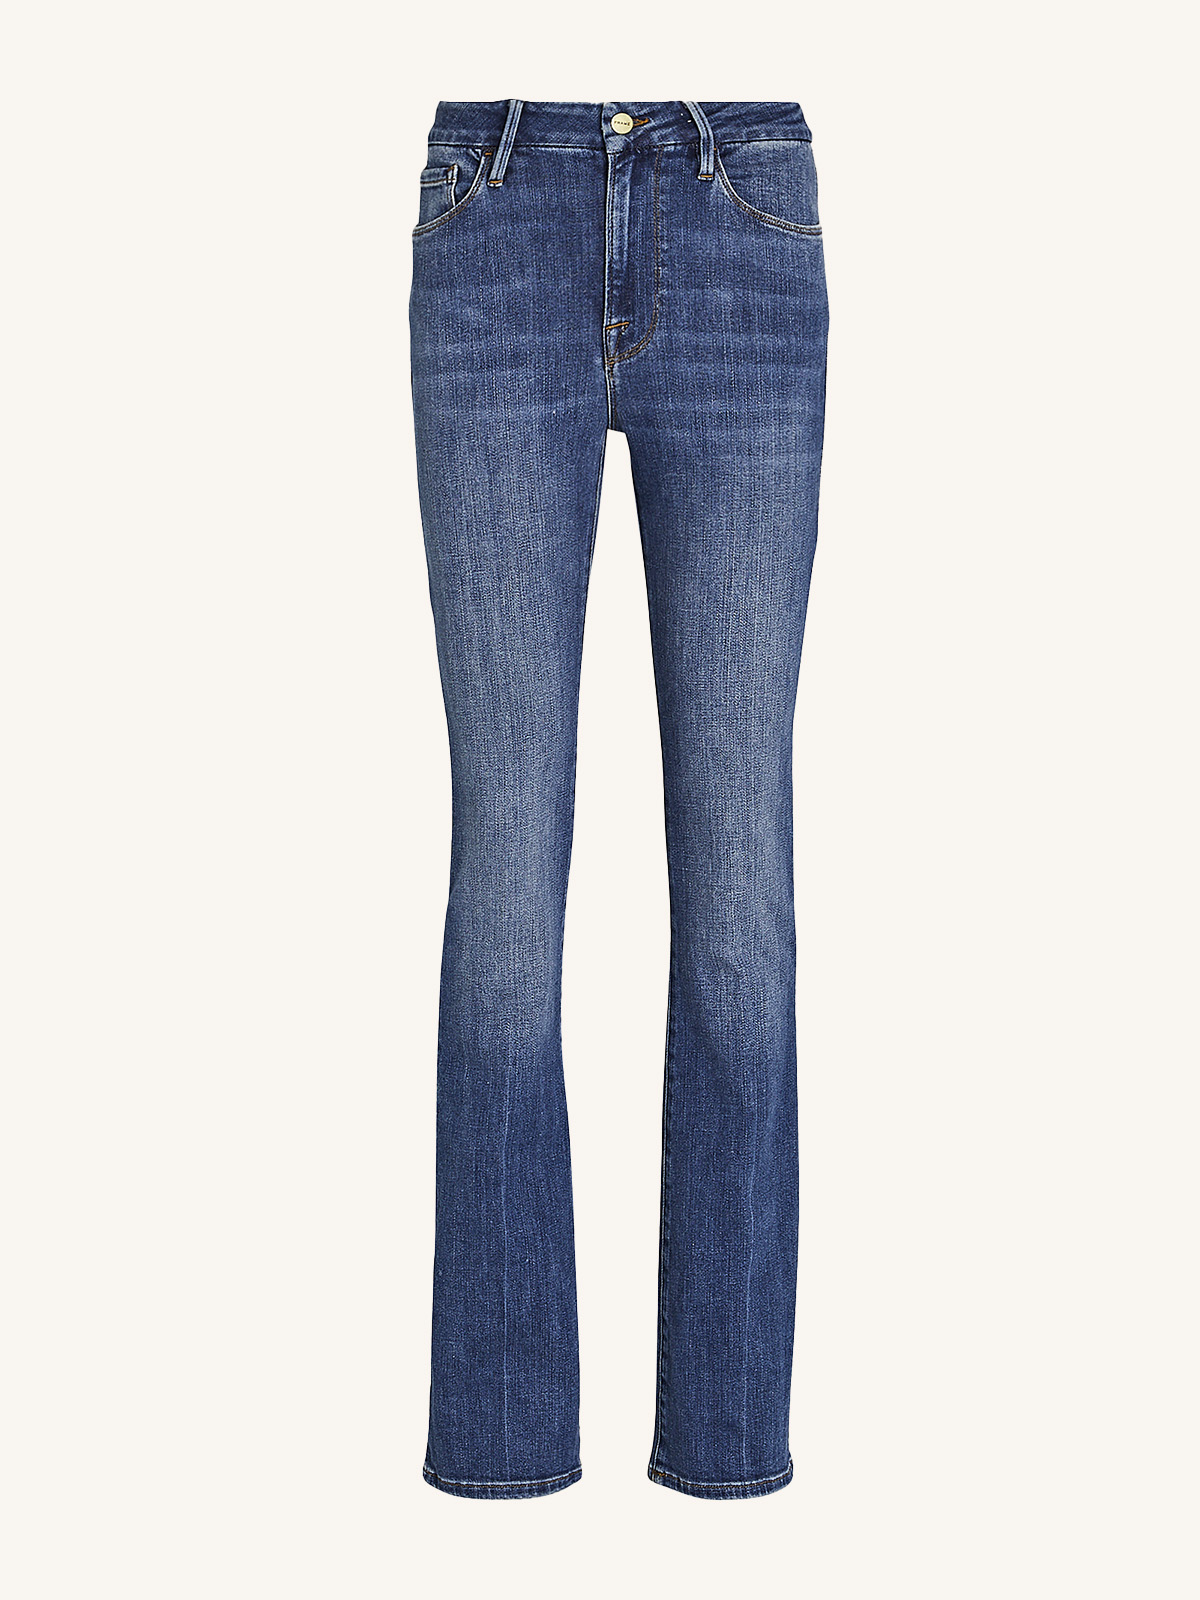 Frame Denim - LMB793 Straight Leg Jeans 